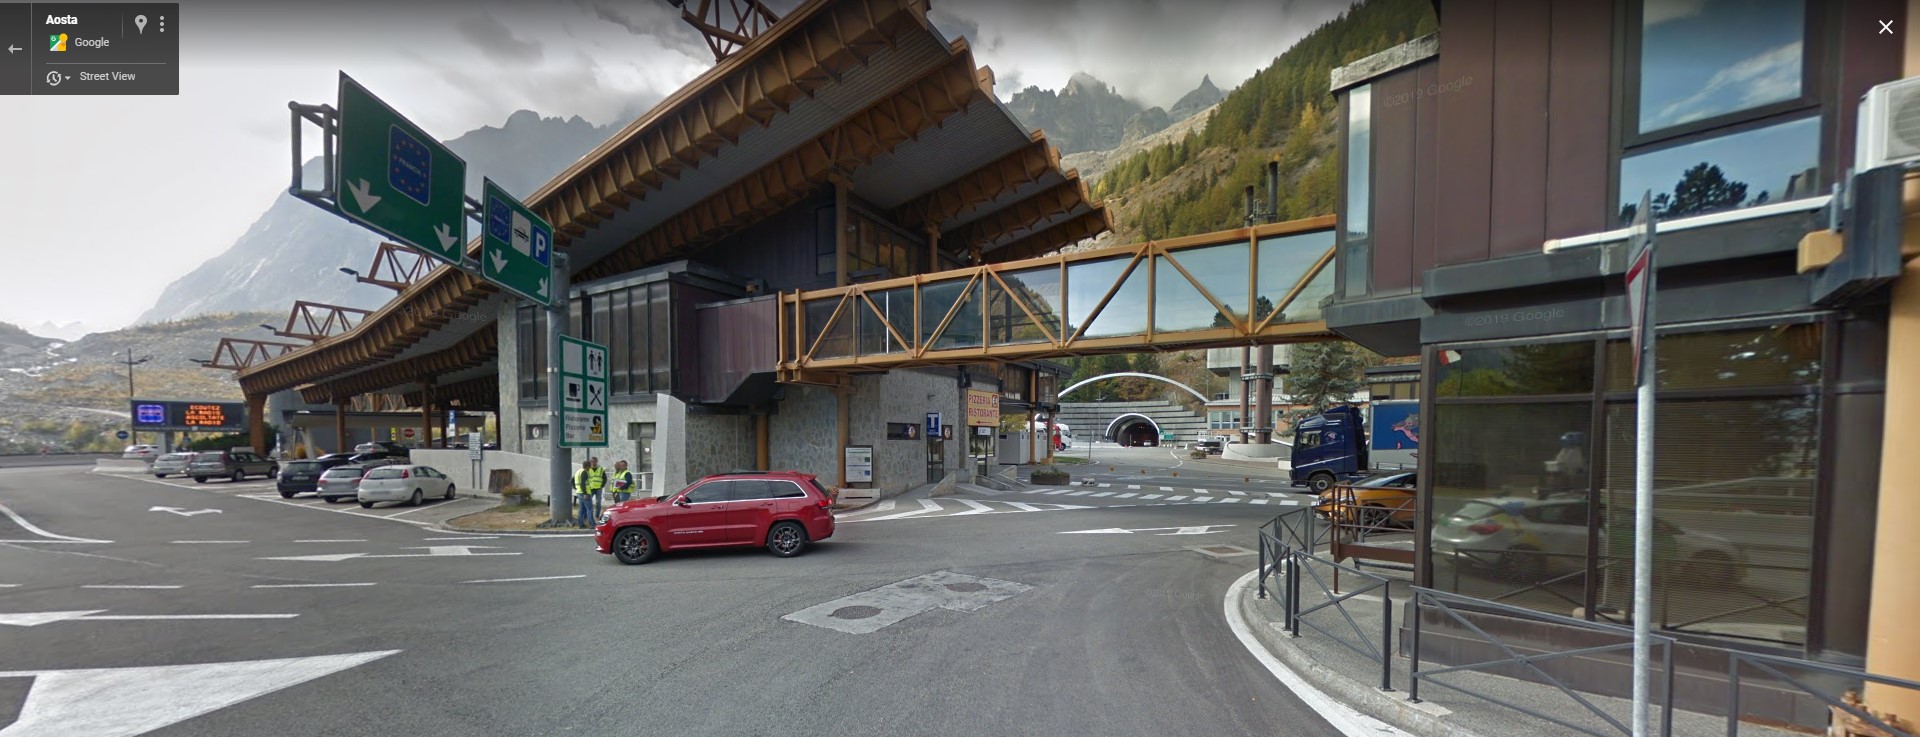 Google_Streetview_Mont_Blanc_tunnel_control.jpg